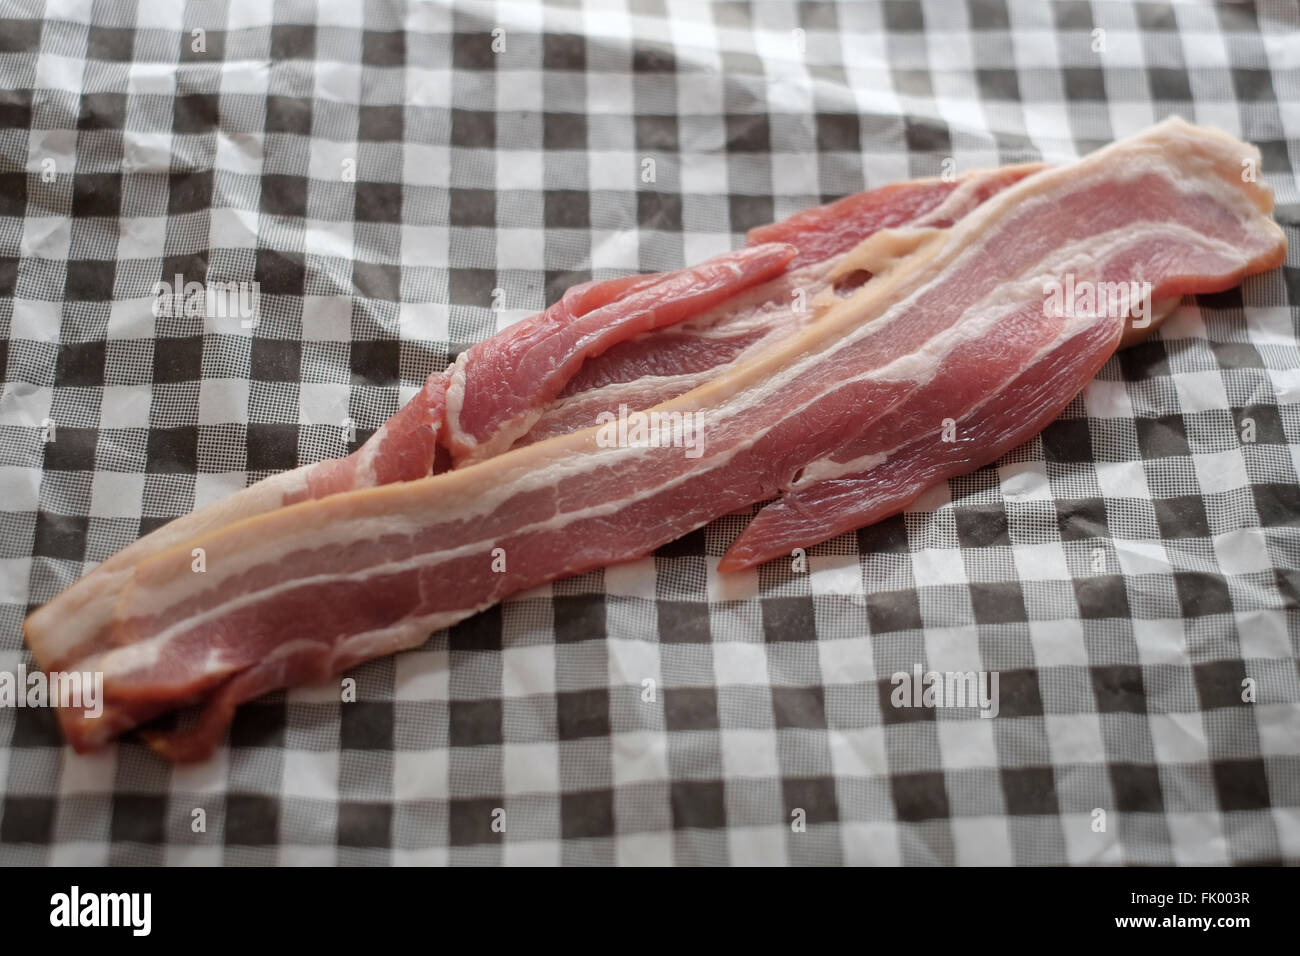 Slices of smoked streaky bacon Stock Photo